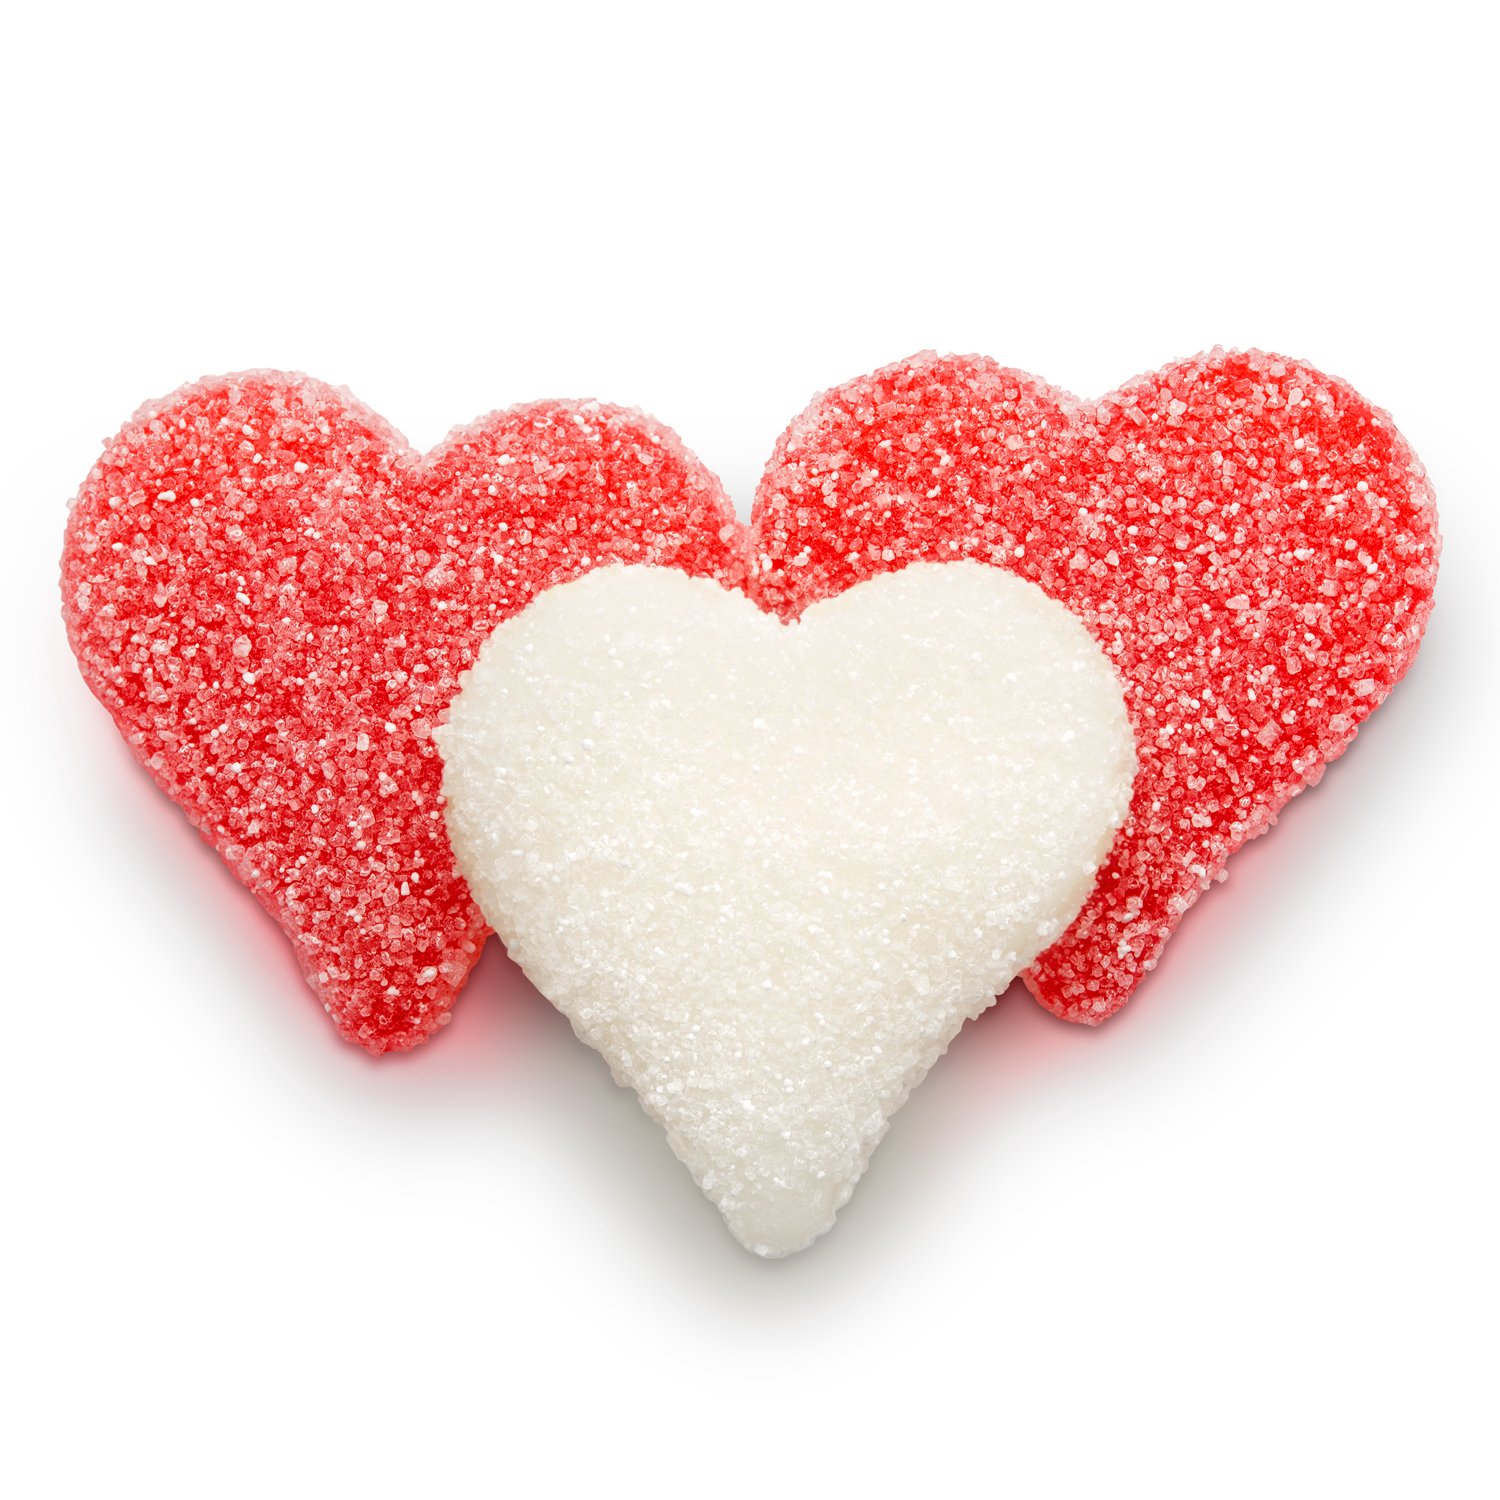 Valentine Sour Gummi Hearts | Valentine's Day Candy & Gifts ...